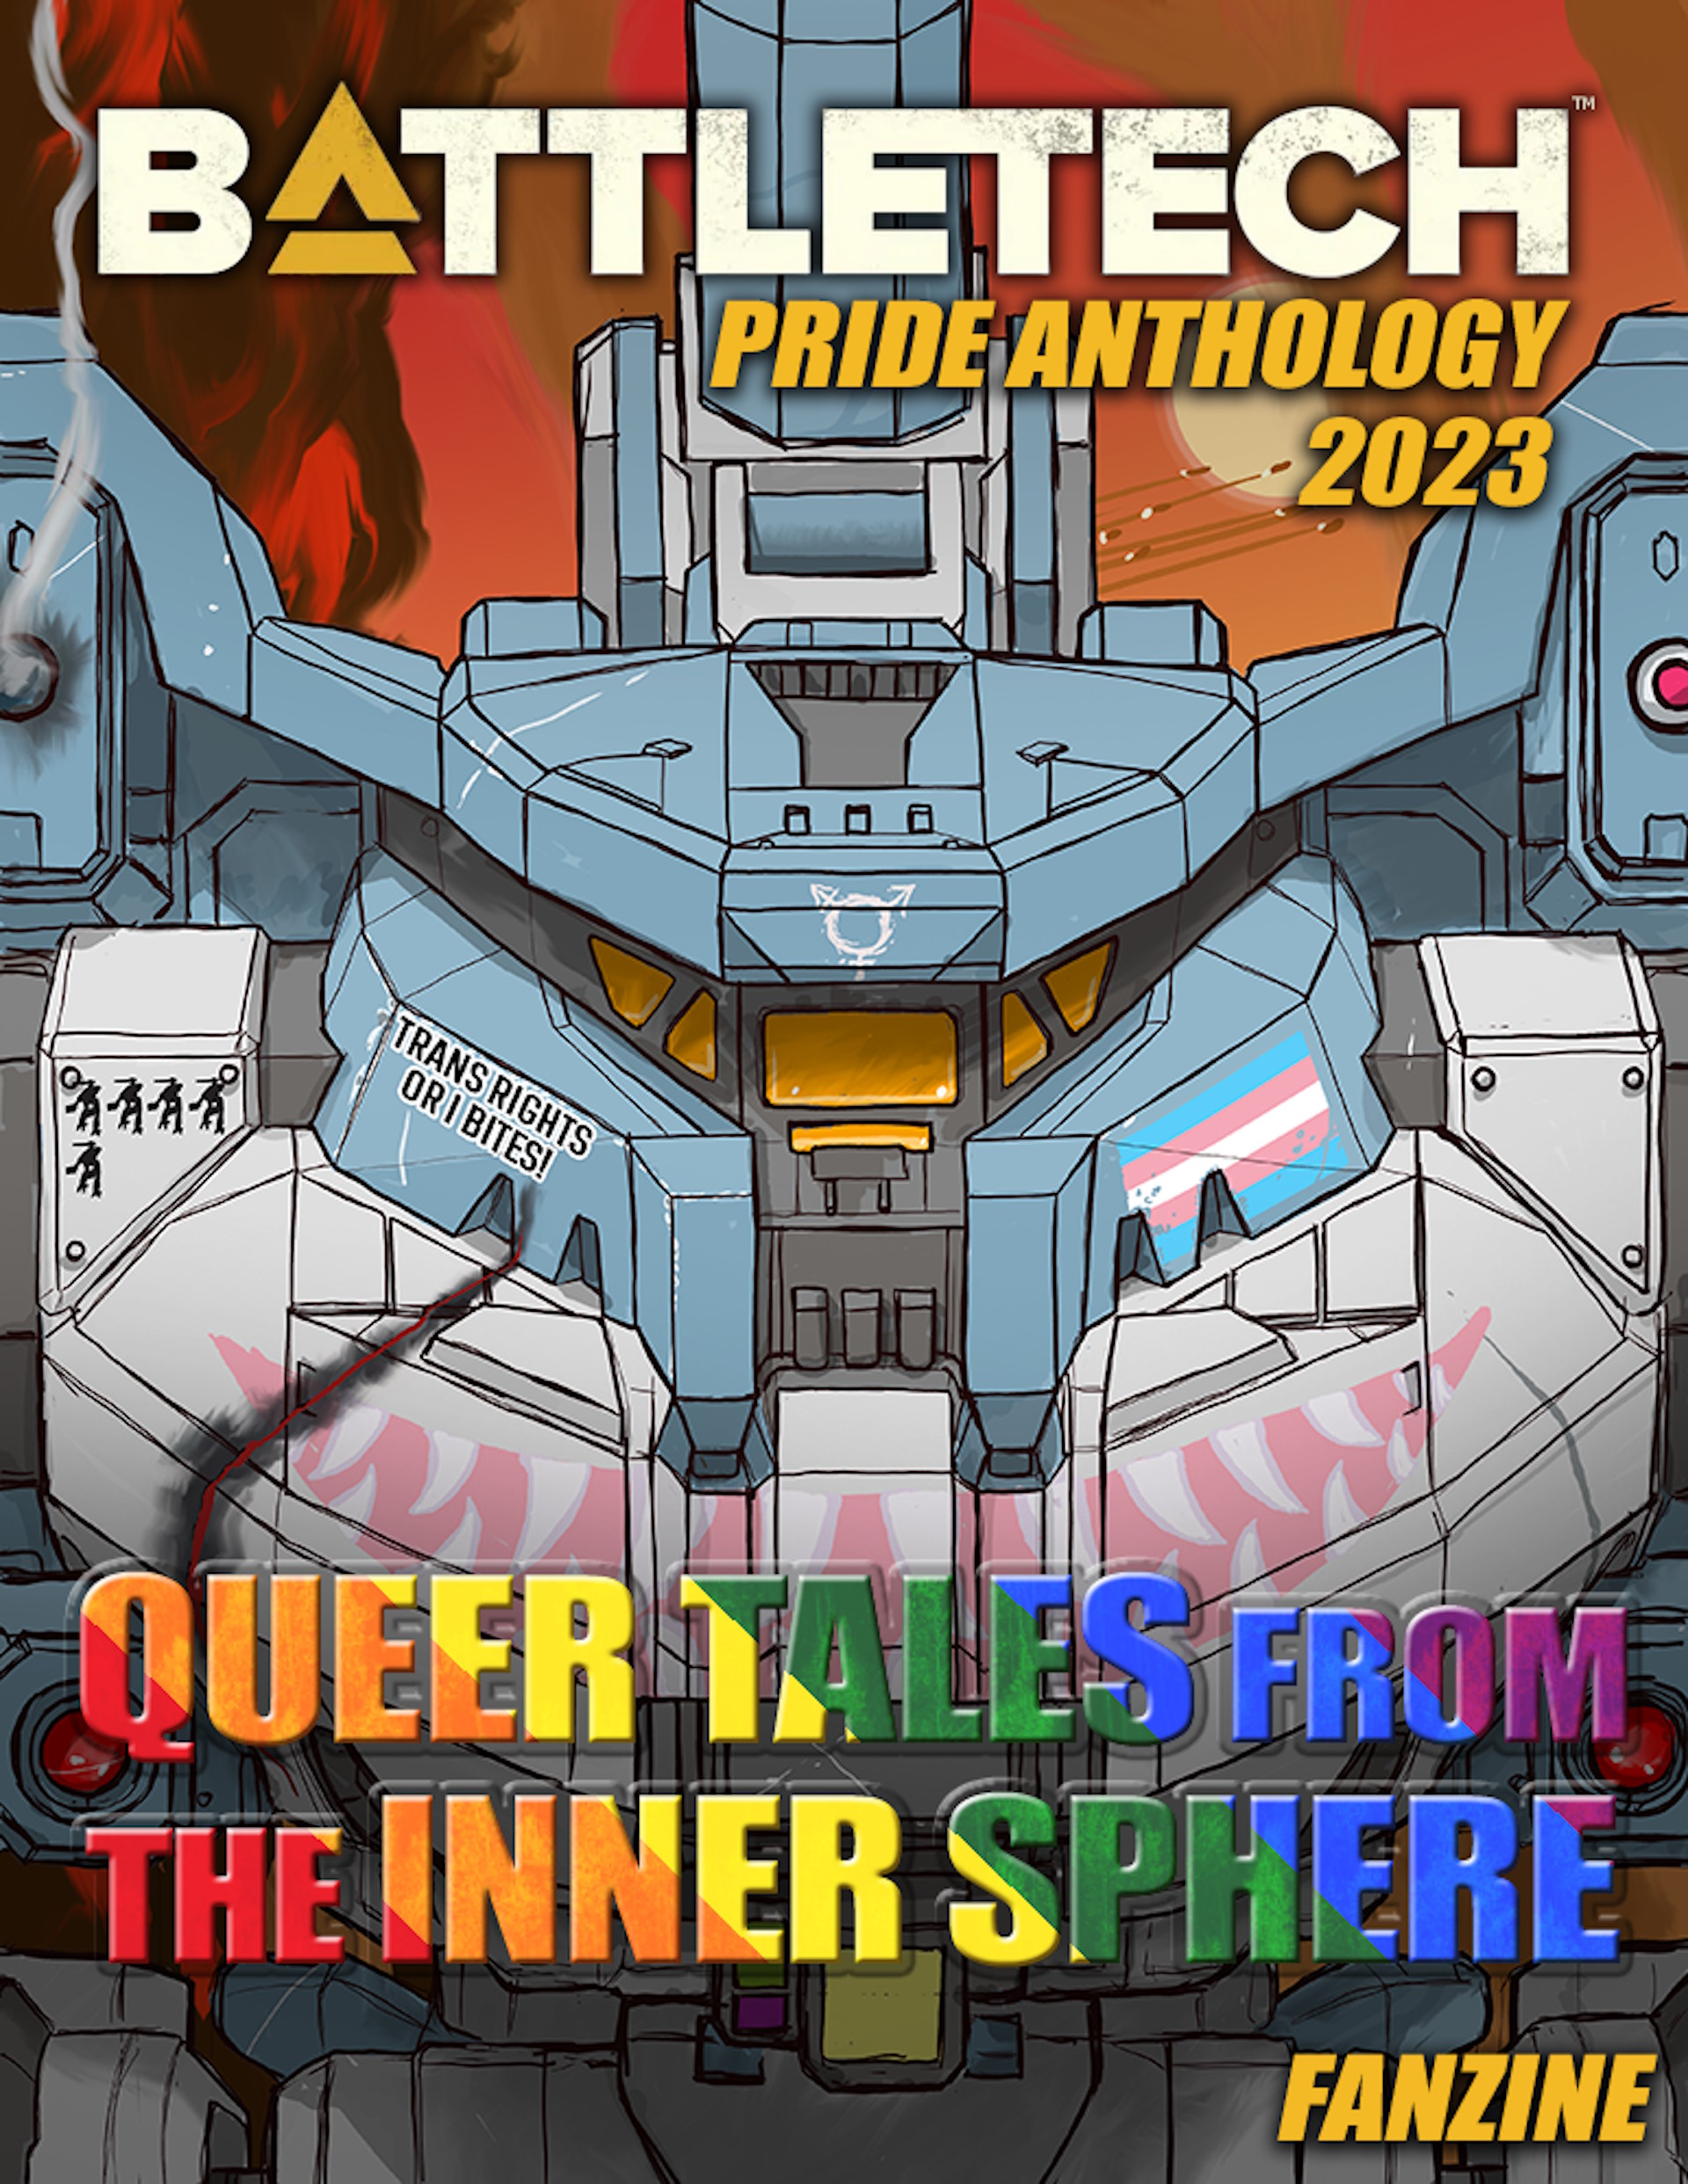 Battletech Pride Anthology 2023 kapağı